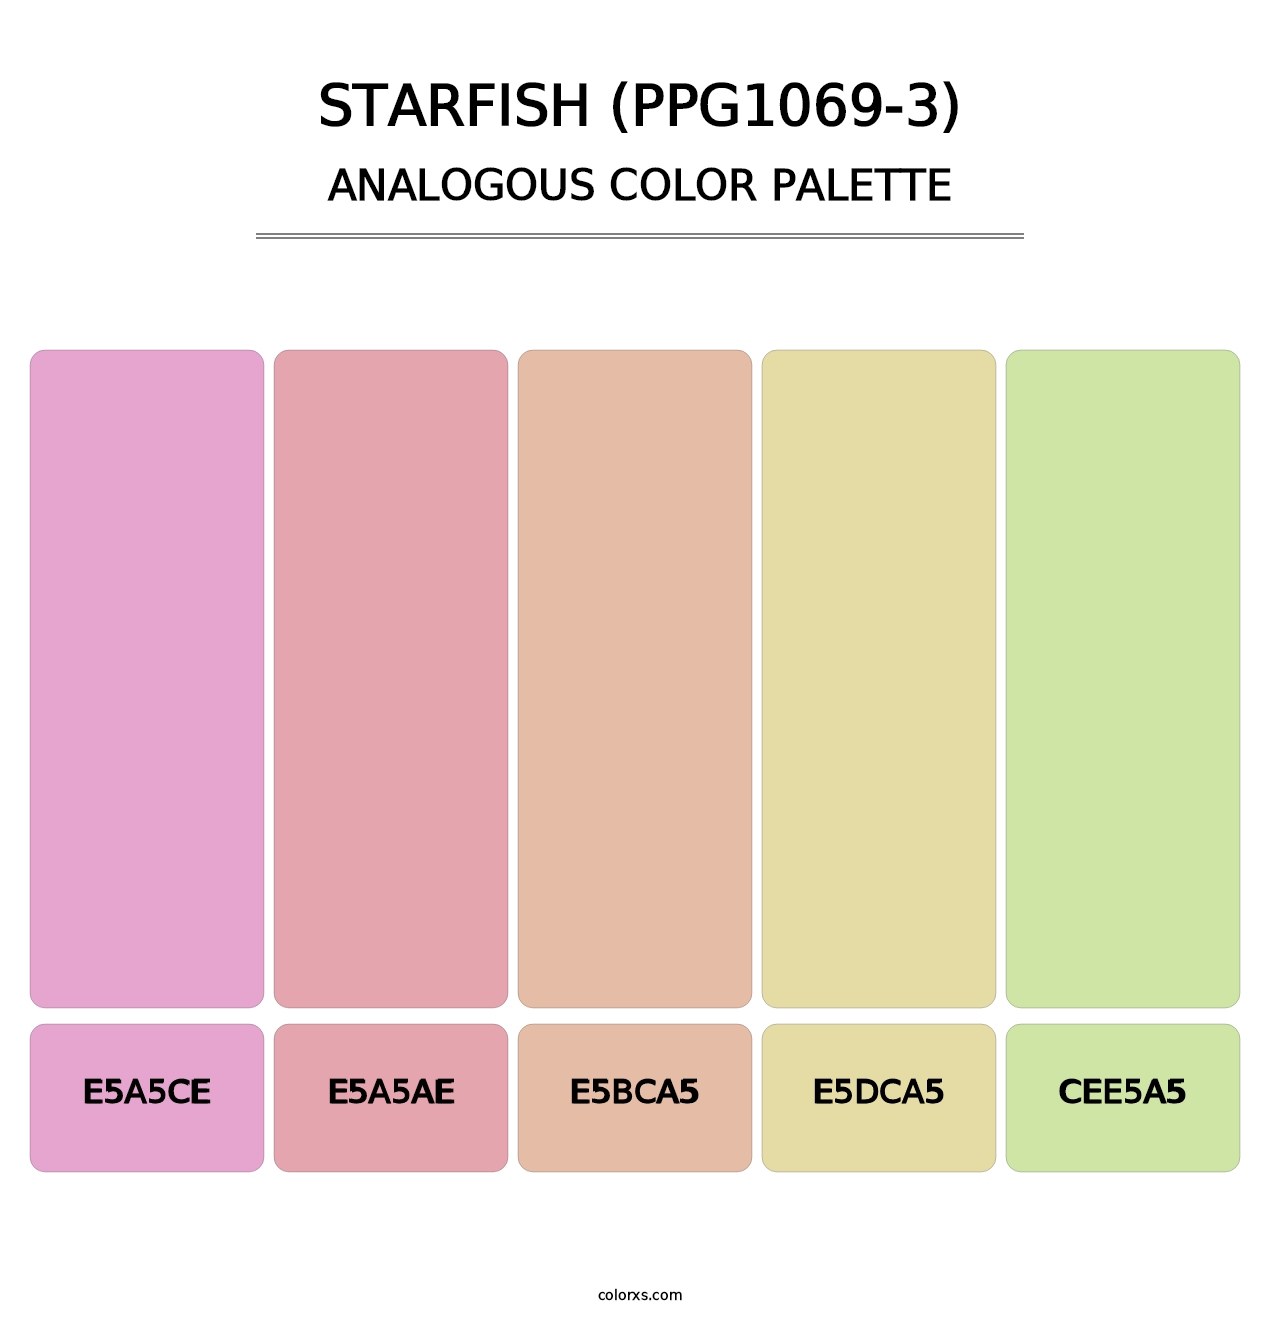 Starfish (PPG1069-3) - Analogous Color Palette